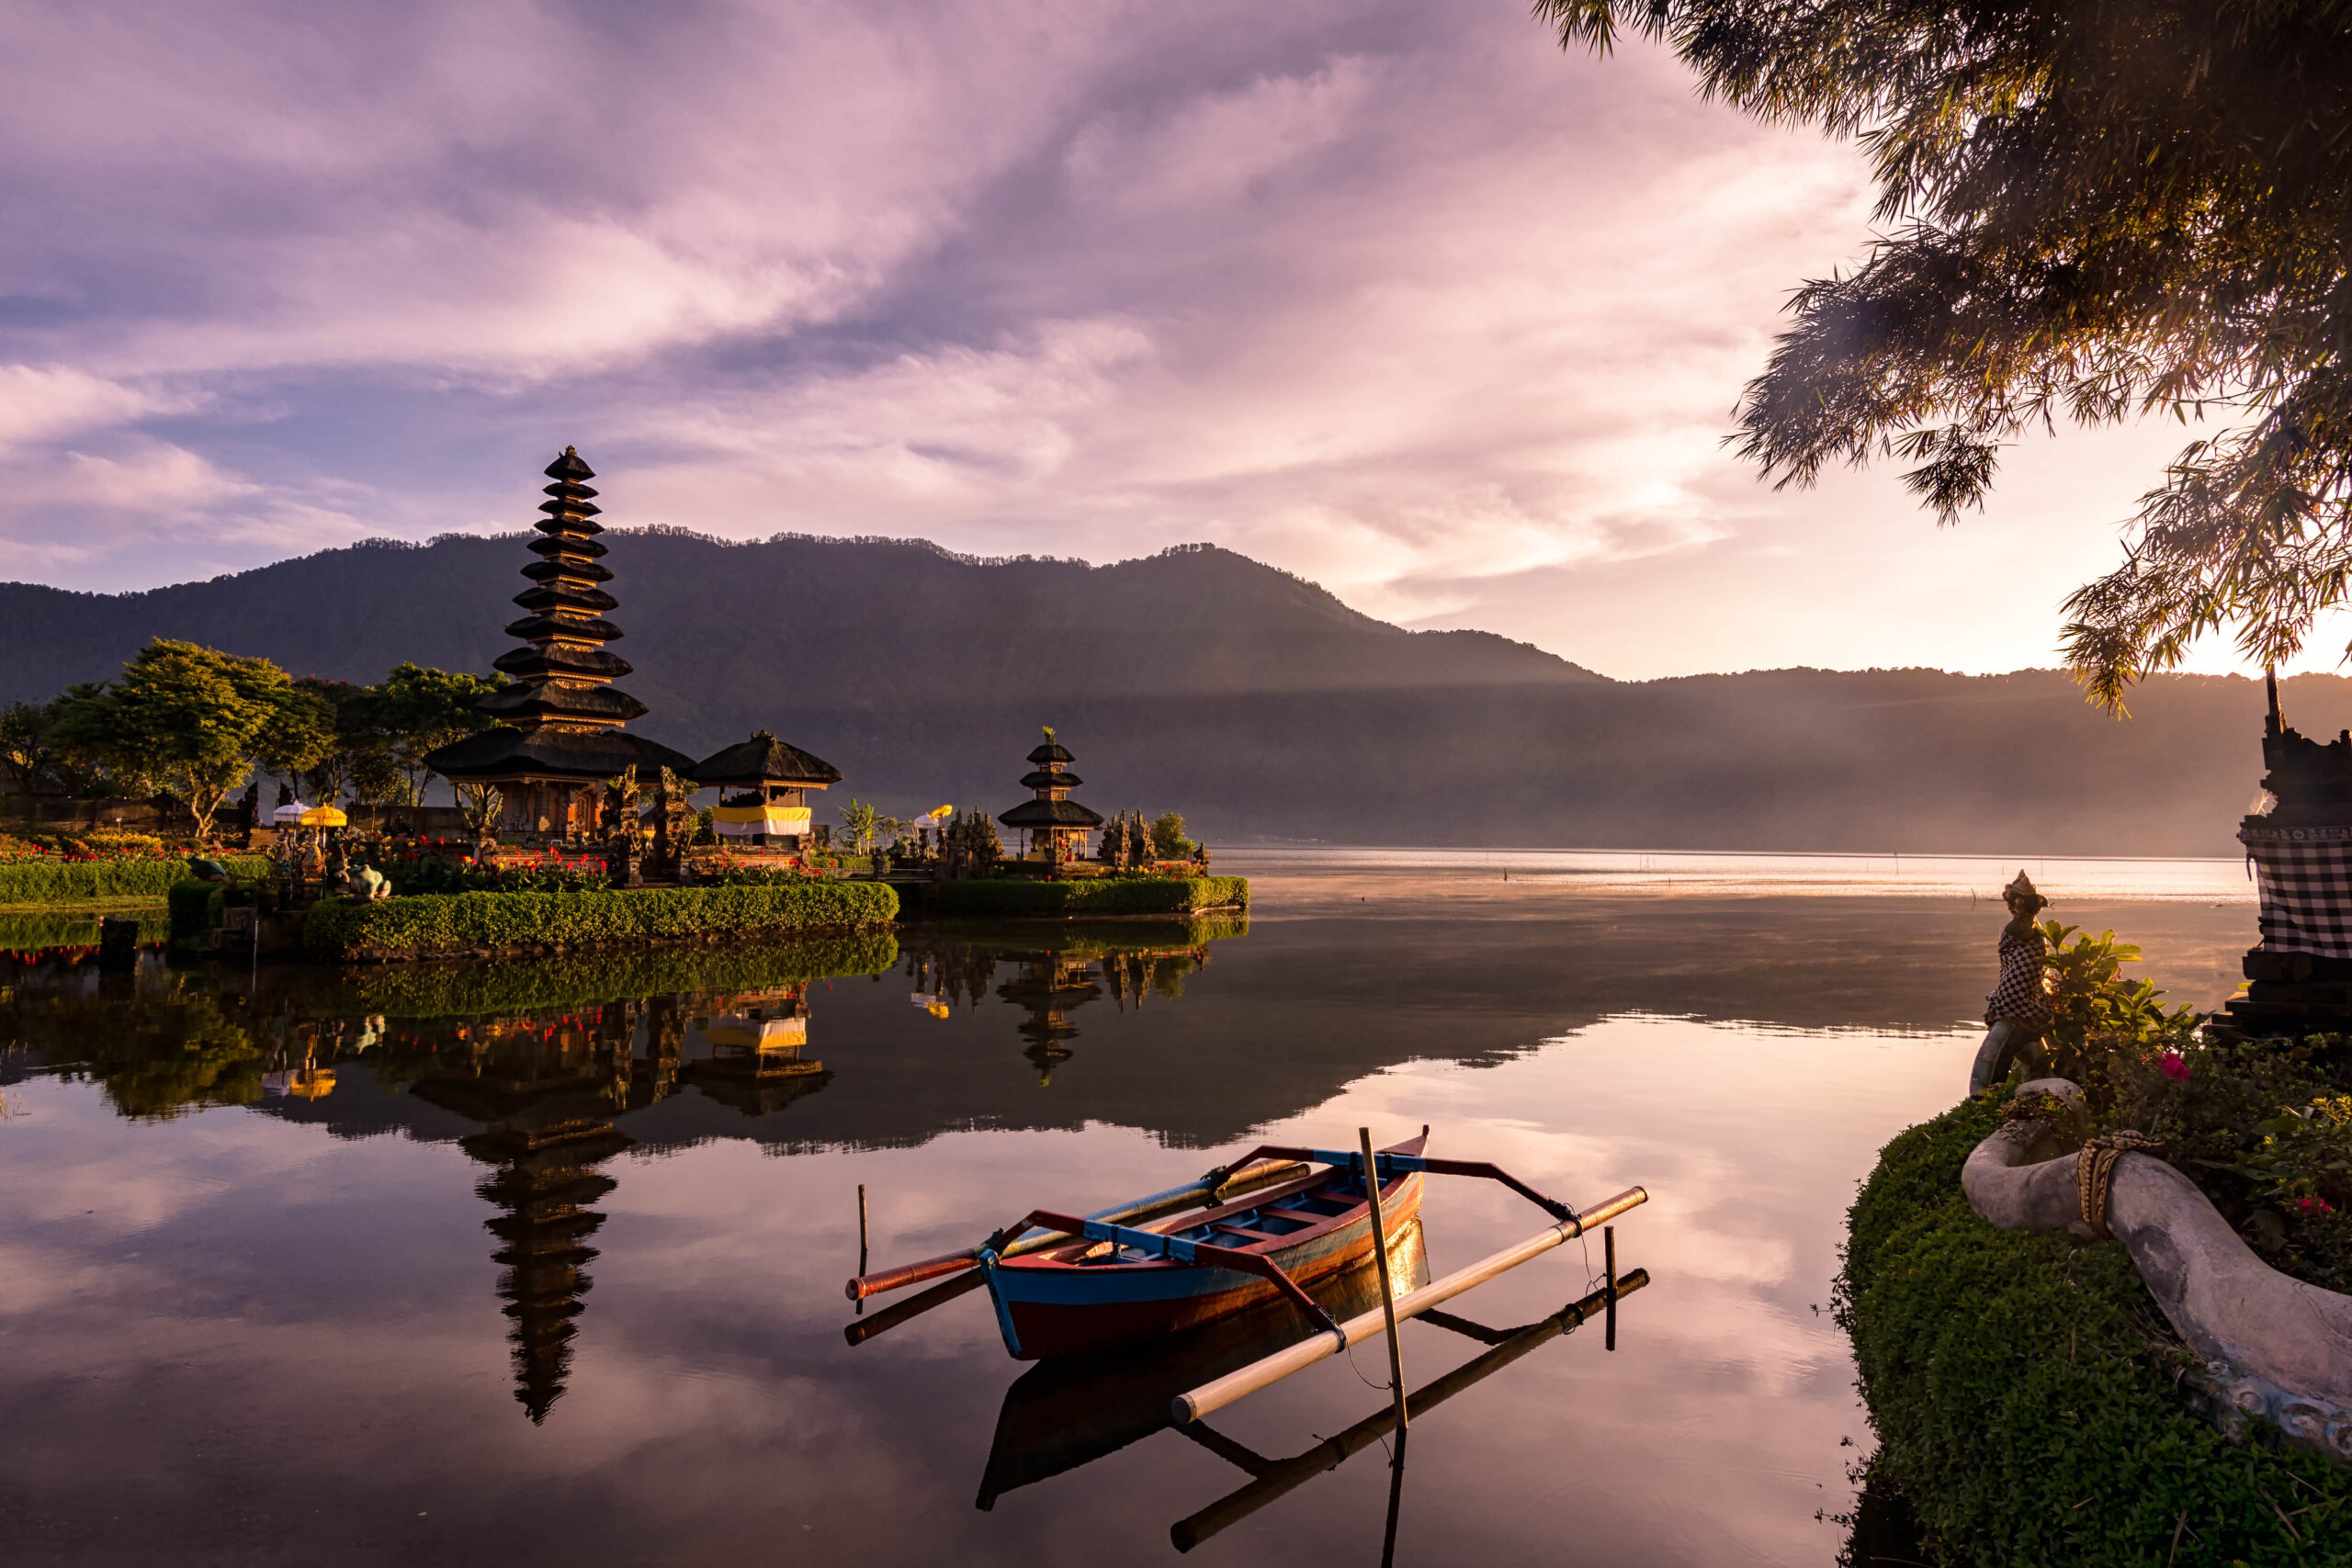 Boek de reis '14-Daagse rondreis Bali'